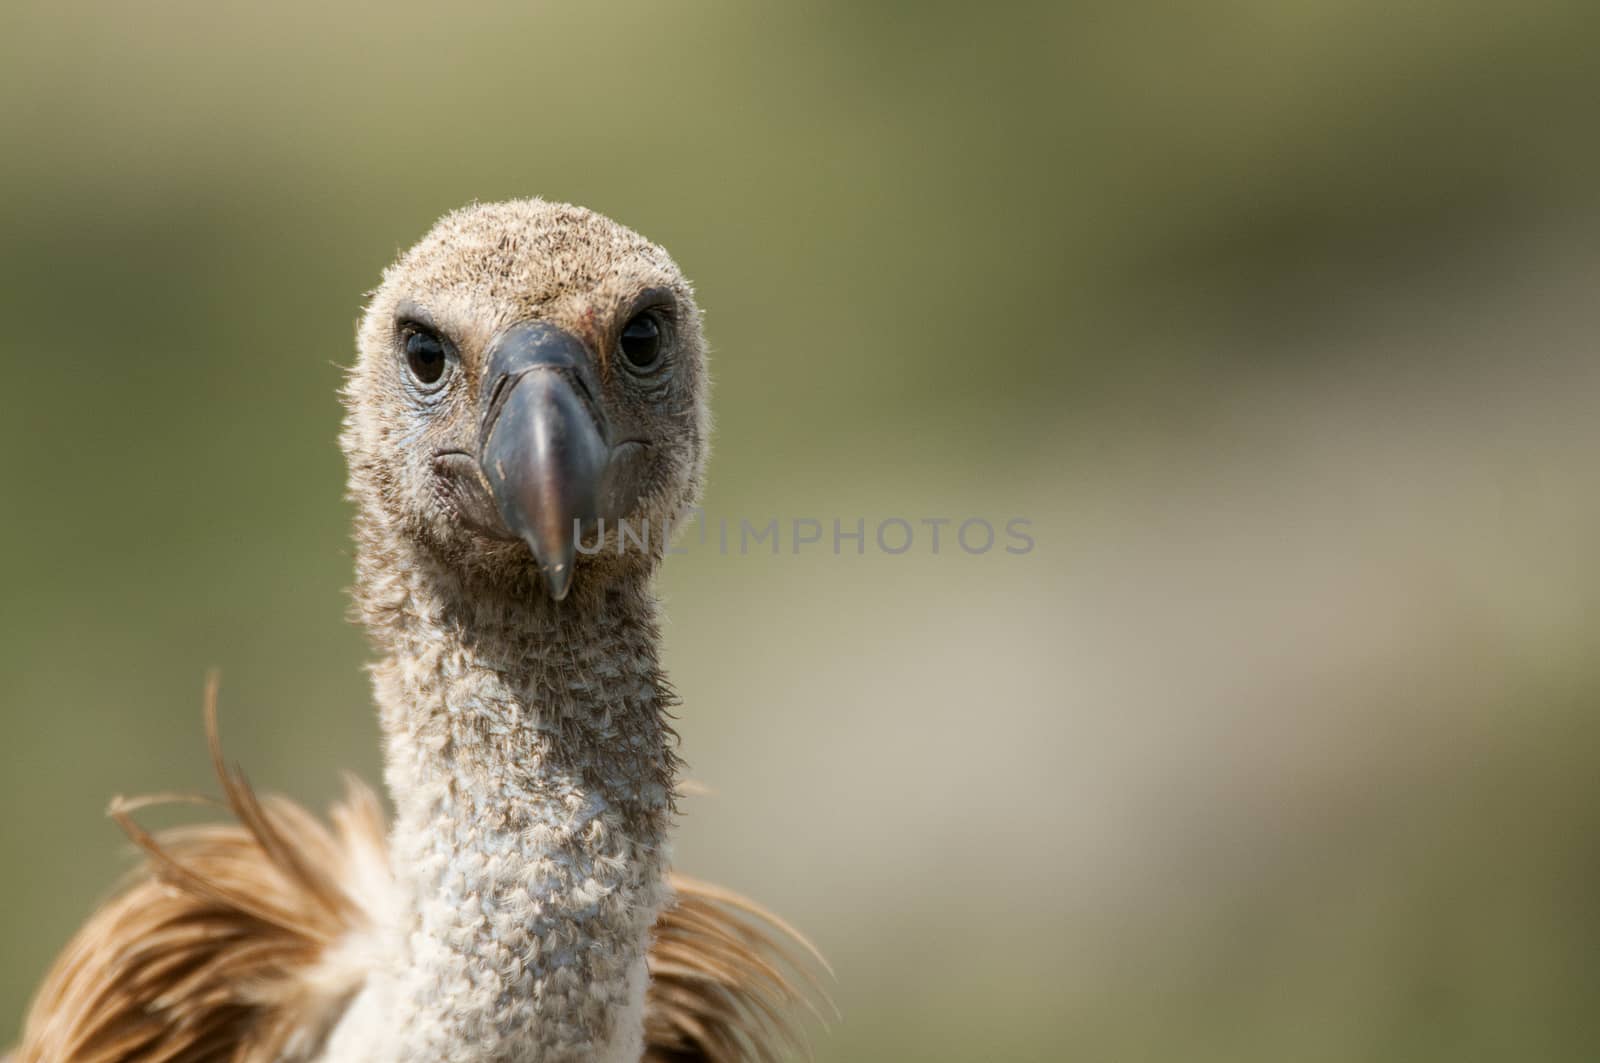 Griffon Vulture (Gyps fulvus) close-up, eyes and beak  by jalonsohu@gmail.com